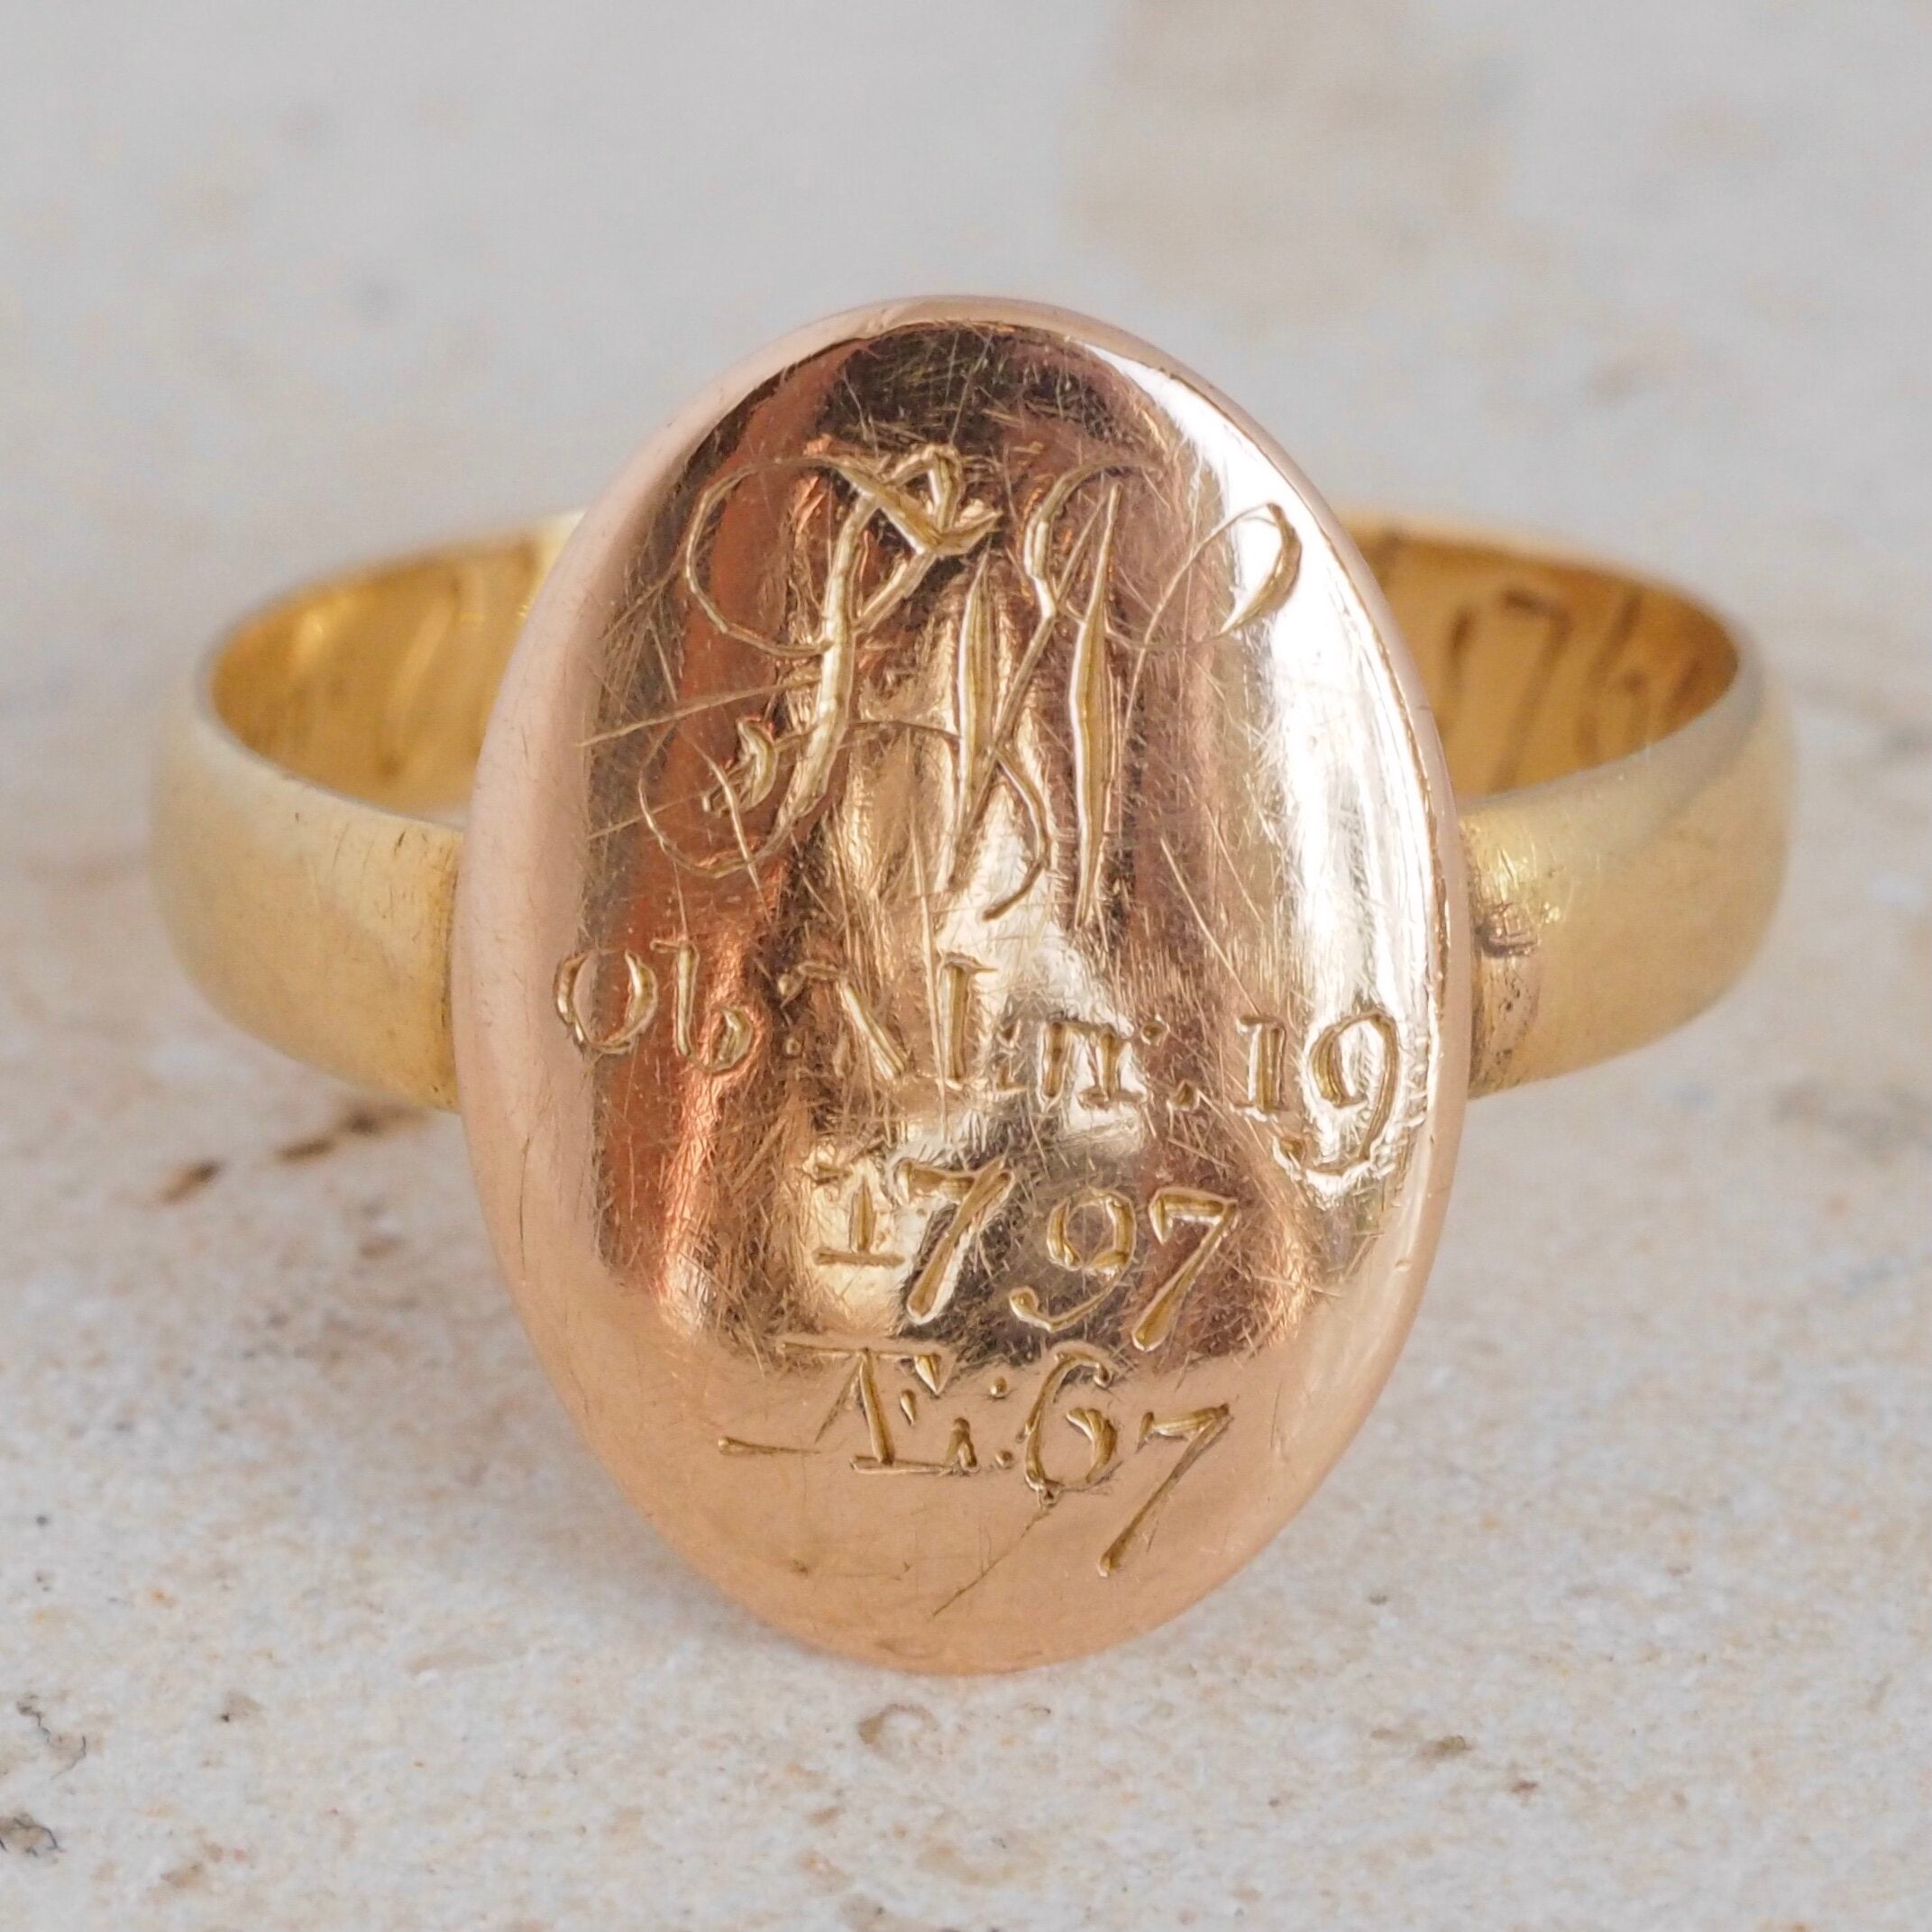 Antique Pre-Revolution American 22k Gold & 18k Gold Signet Ring